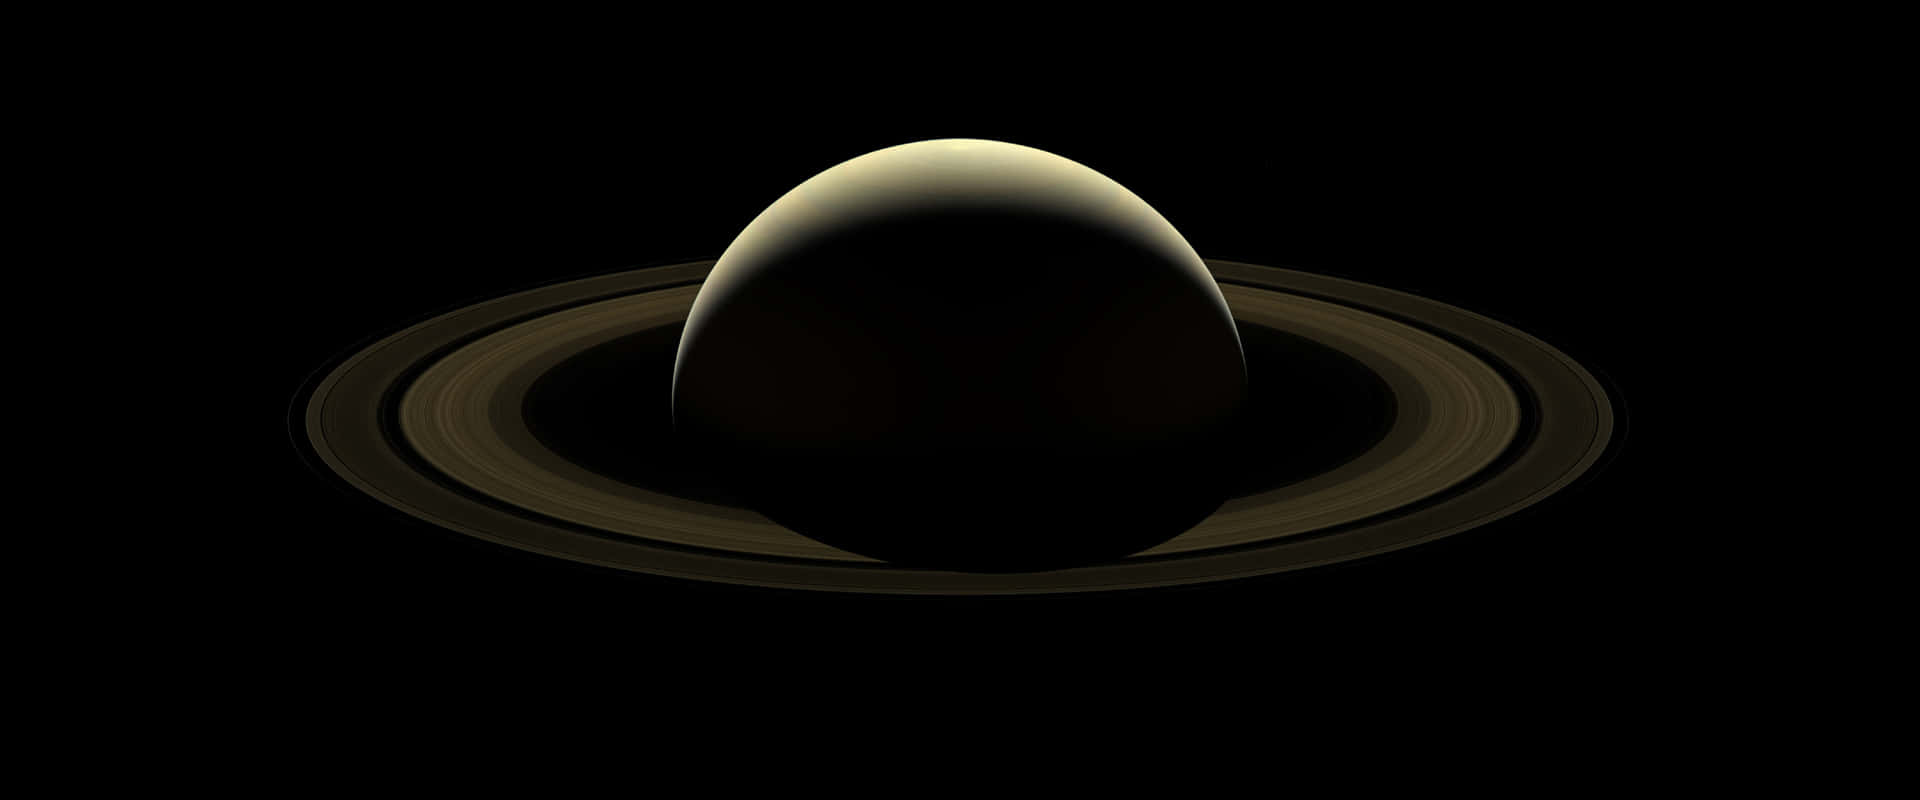 Saturn Silhouette Against Sunlight Wallpaper